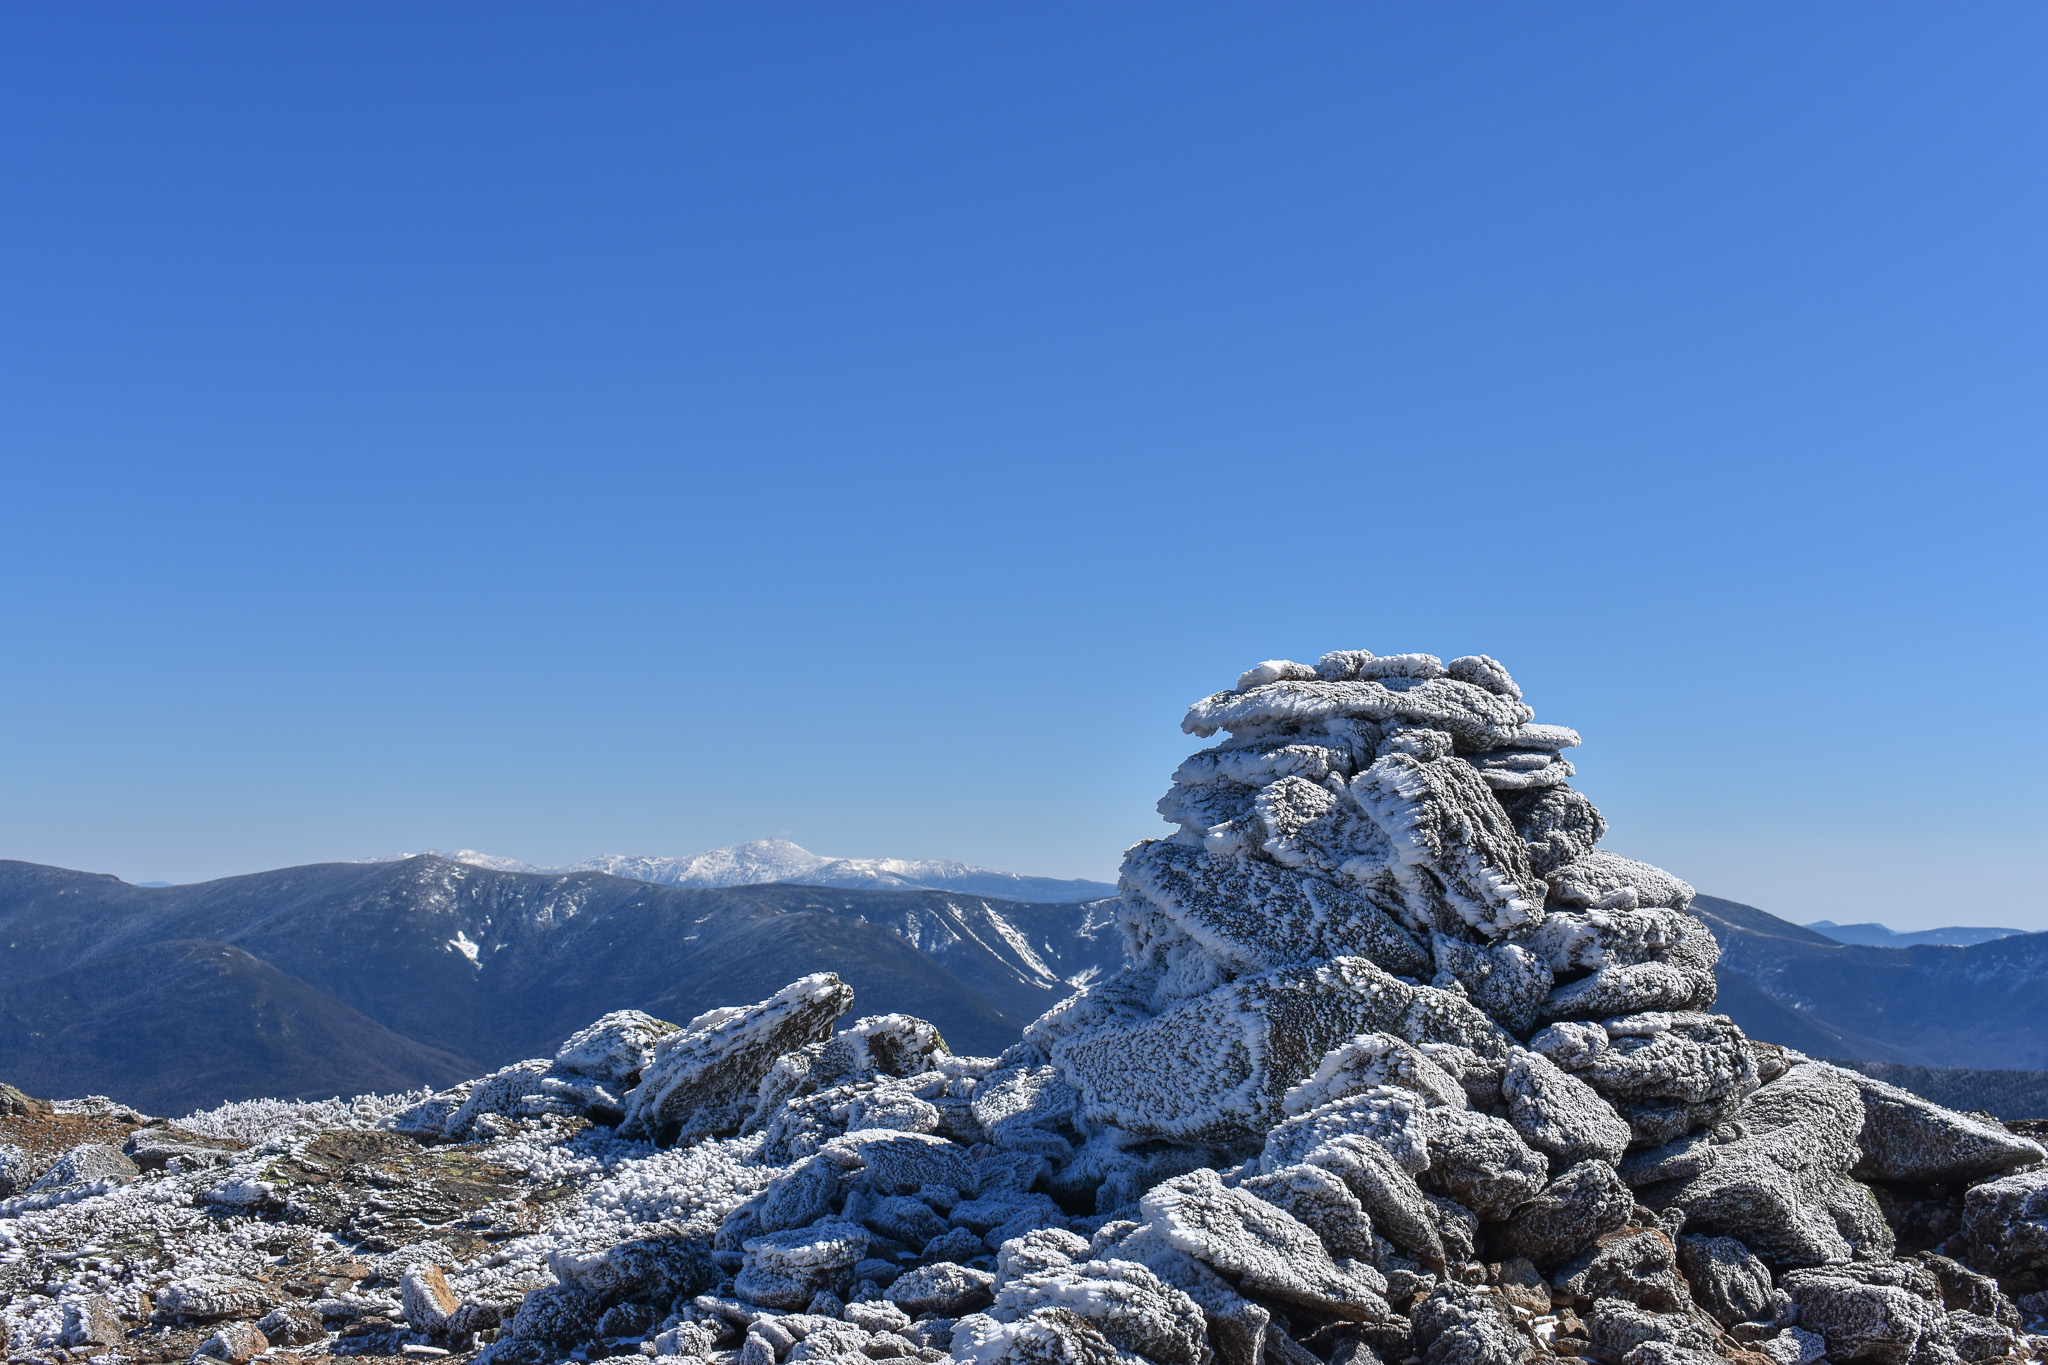 Mount Washington seen from Franconia Ridge in winter 